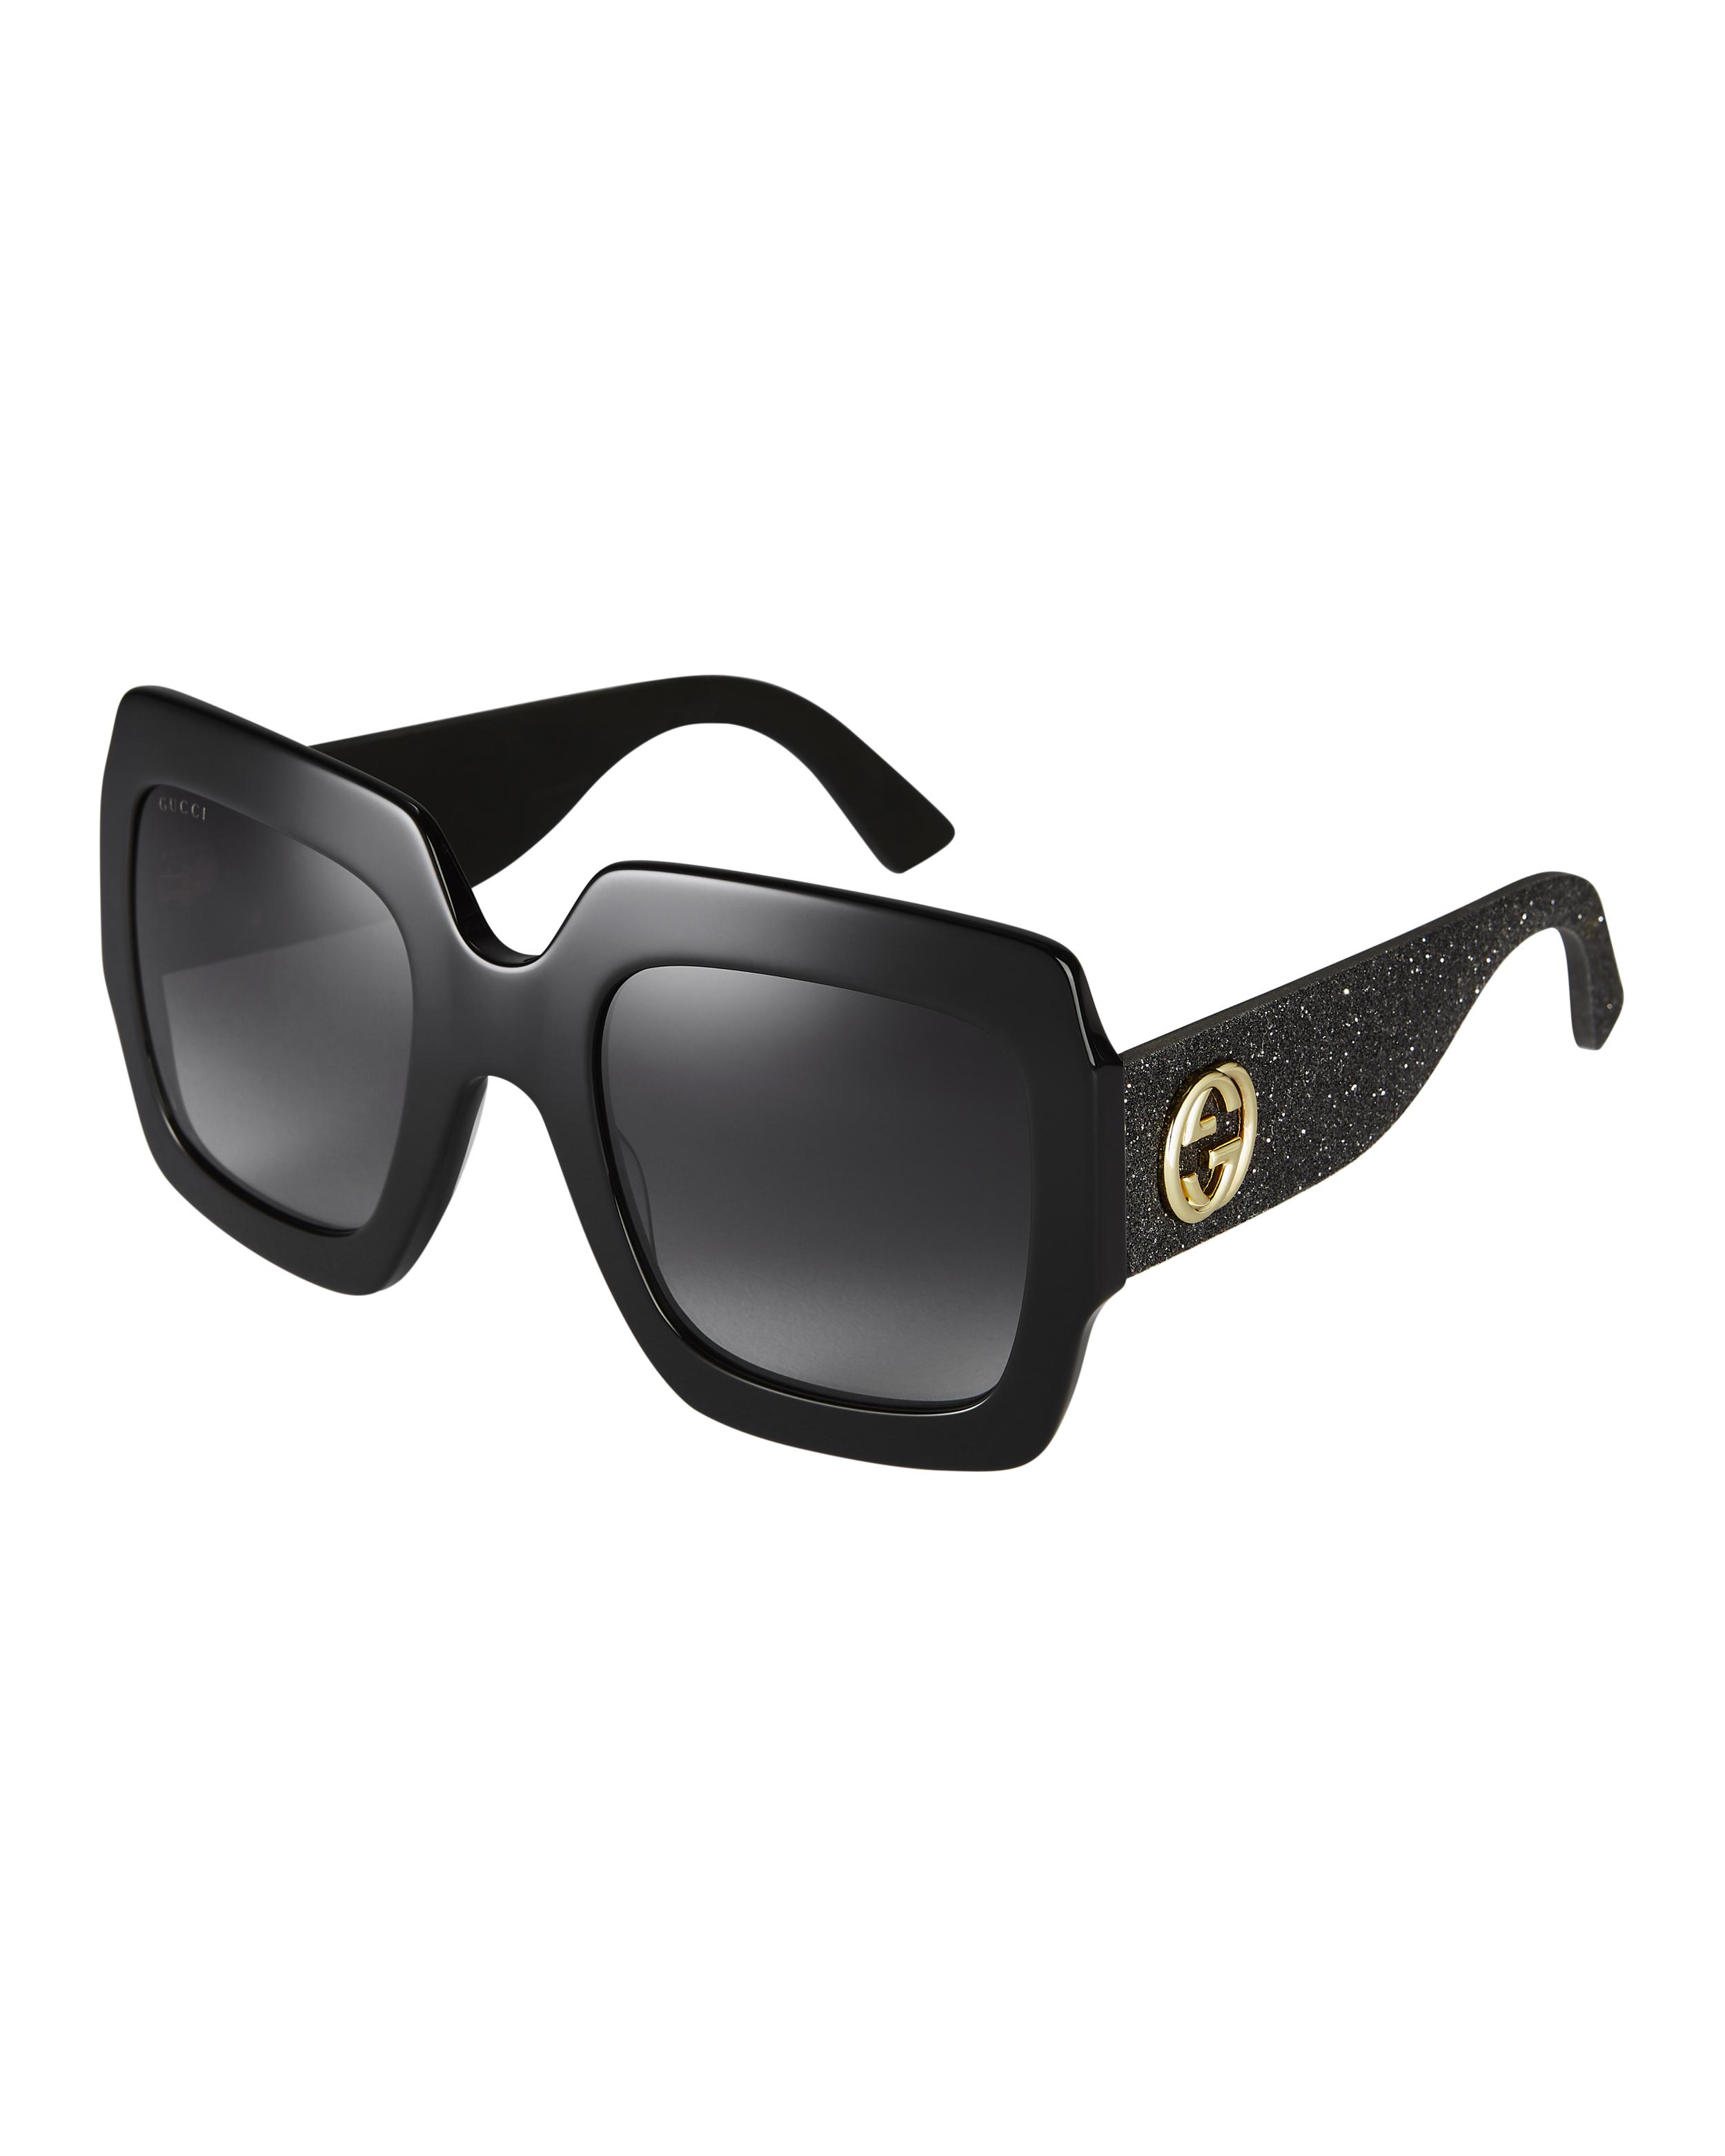 Gucci GG1325S 001 Black Dark Grey Rectangular Women Sunglasses AUTHENTIC  889652412542 | eBay